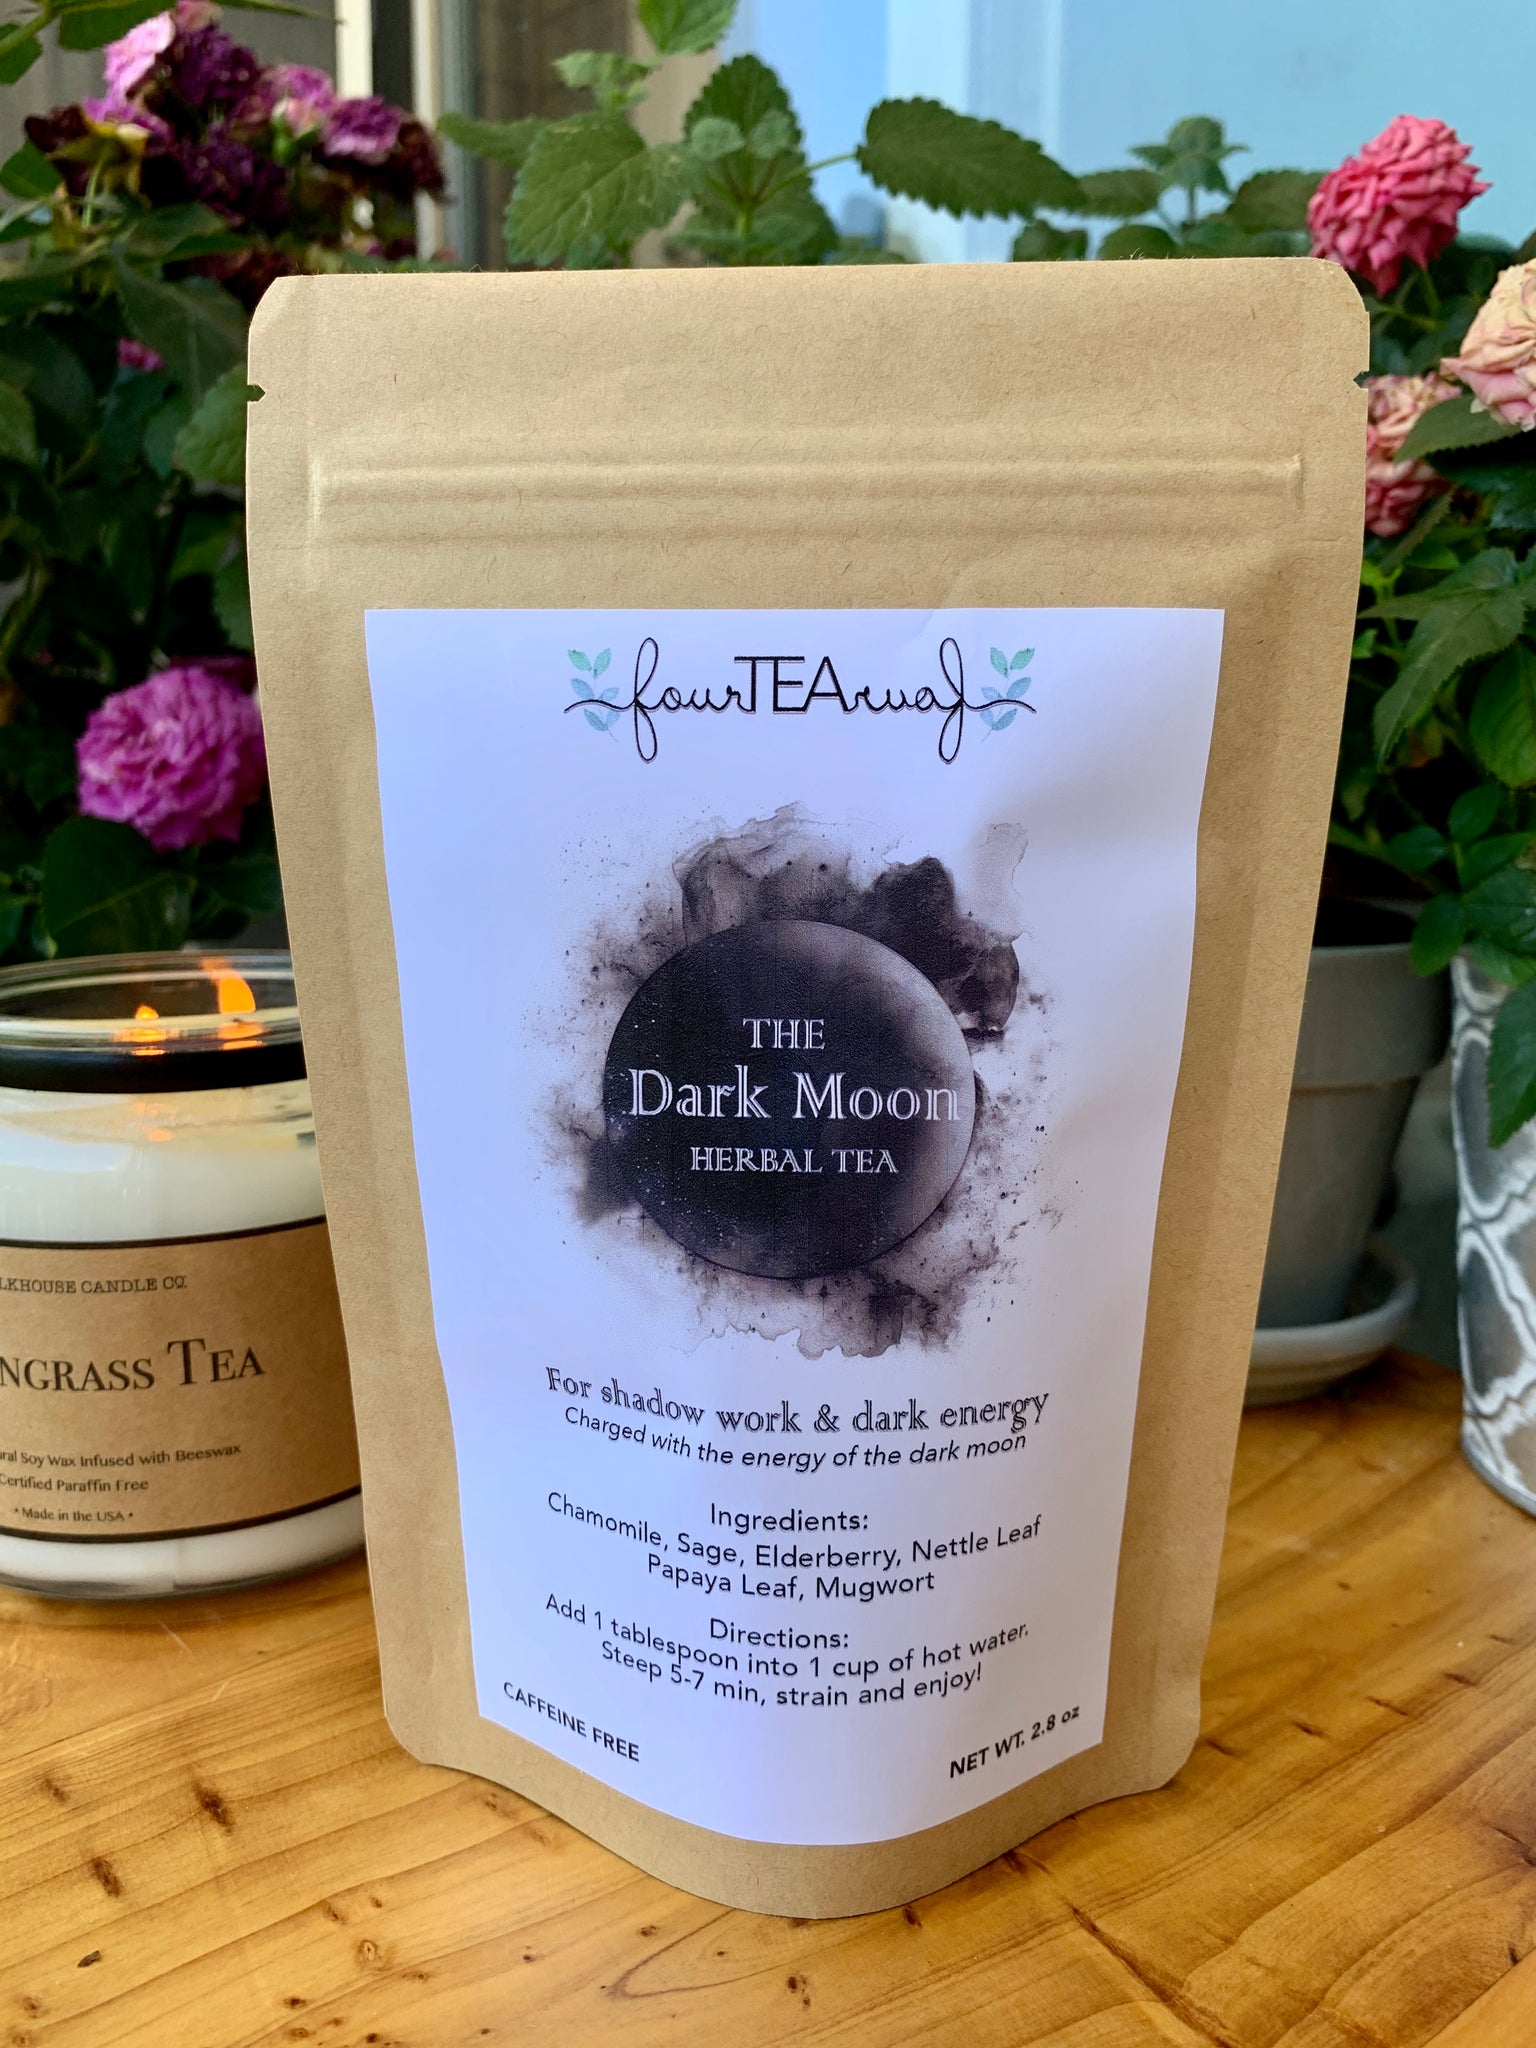 The Dark Moon Herbal Tea